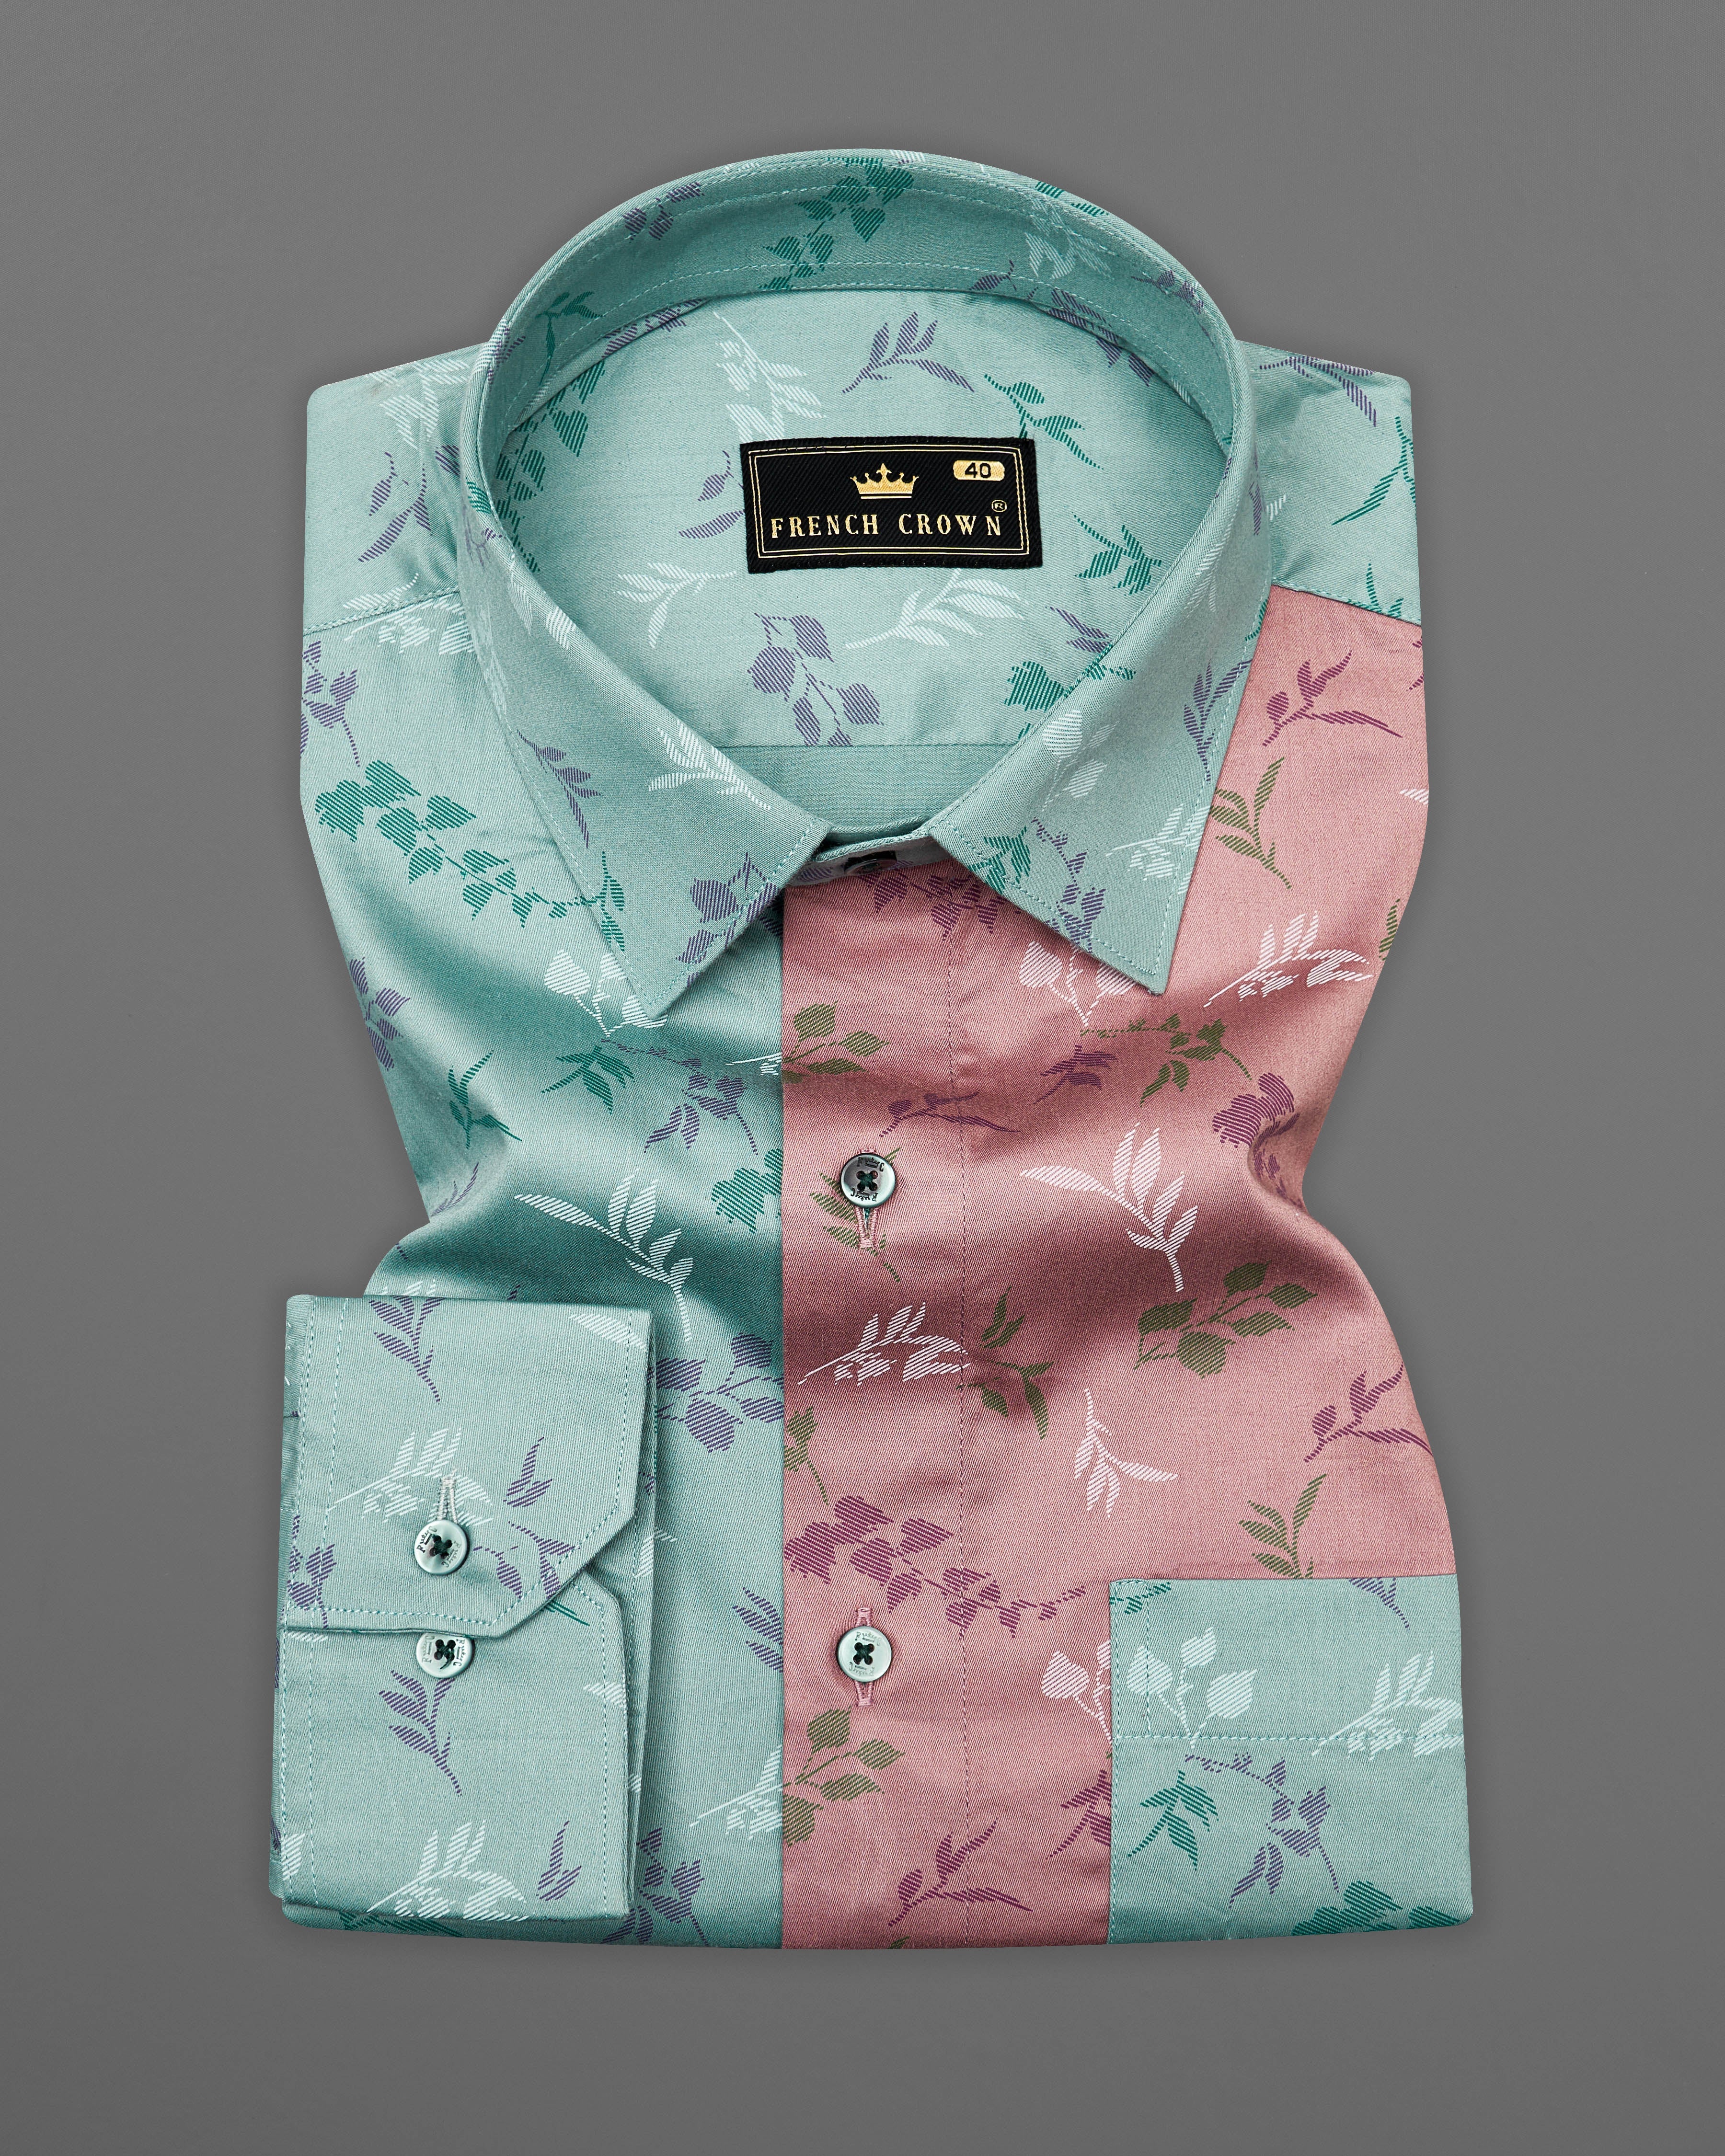 Half Opaque Green with Half Dirty Pink Ditsy Printed Super Soft Premium Cotton Designer Shirt 9373-GR-P88-38, 9373-GR-P88-H-38, 9373-GR-P88-39, 9373-GR-P88-H-39, 9373-GR-P88-40, 9373-GR-P88-H-40, 9373-GR-P88-42, 9373-GR-P88-H-42, 9373-GR-P88-44, 9373-GR-P88-H-44, 9373-GR-P88-46, 9373-GR-P88-H-46, 9373-GR-P88-48, 9373-GR-P88-H-48, 9373-GR-P88-50, 9373-GR-P88-H-50, 9373-GR-P88-52, 9373-GR-P88-H-52